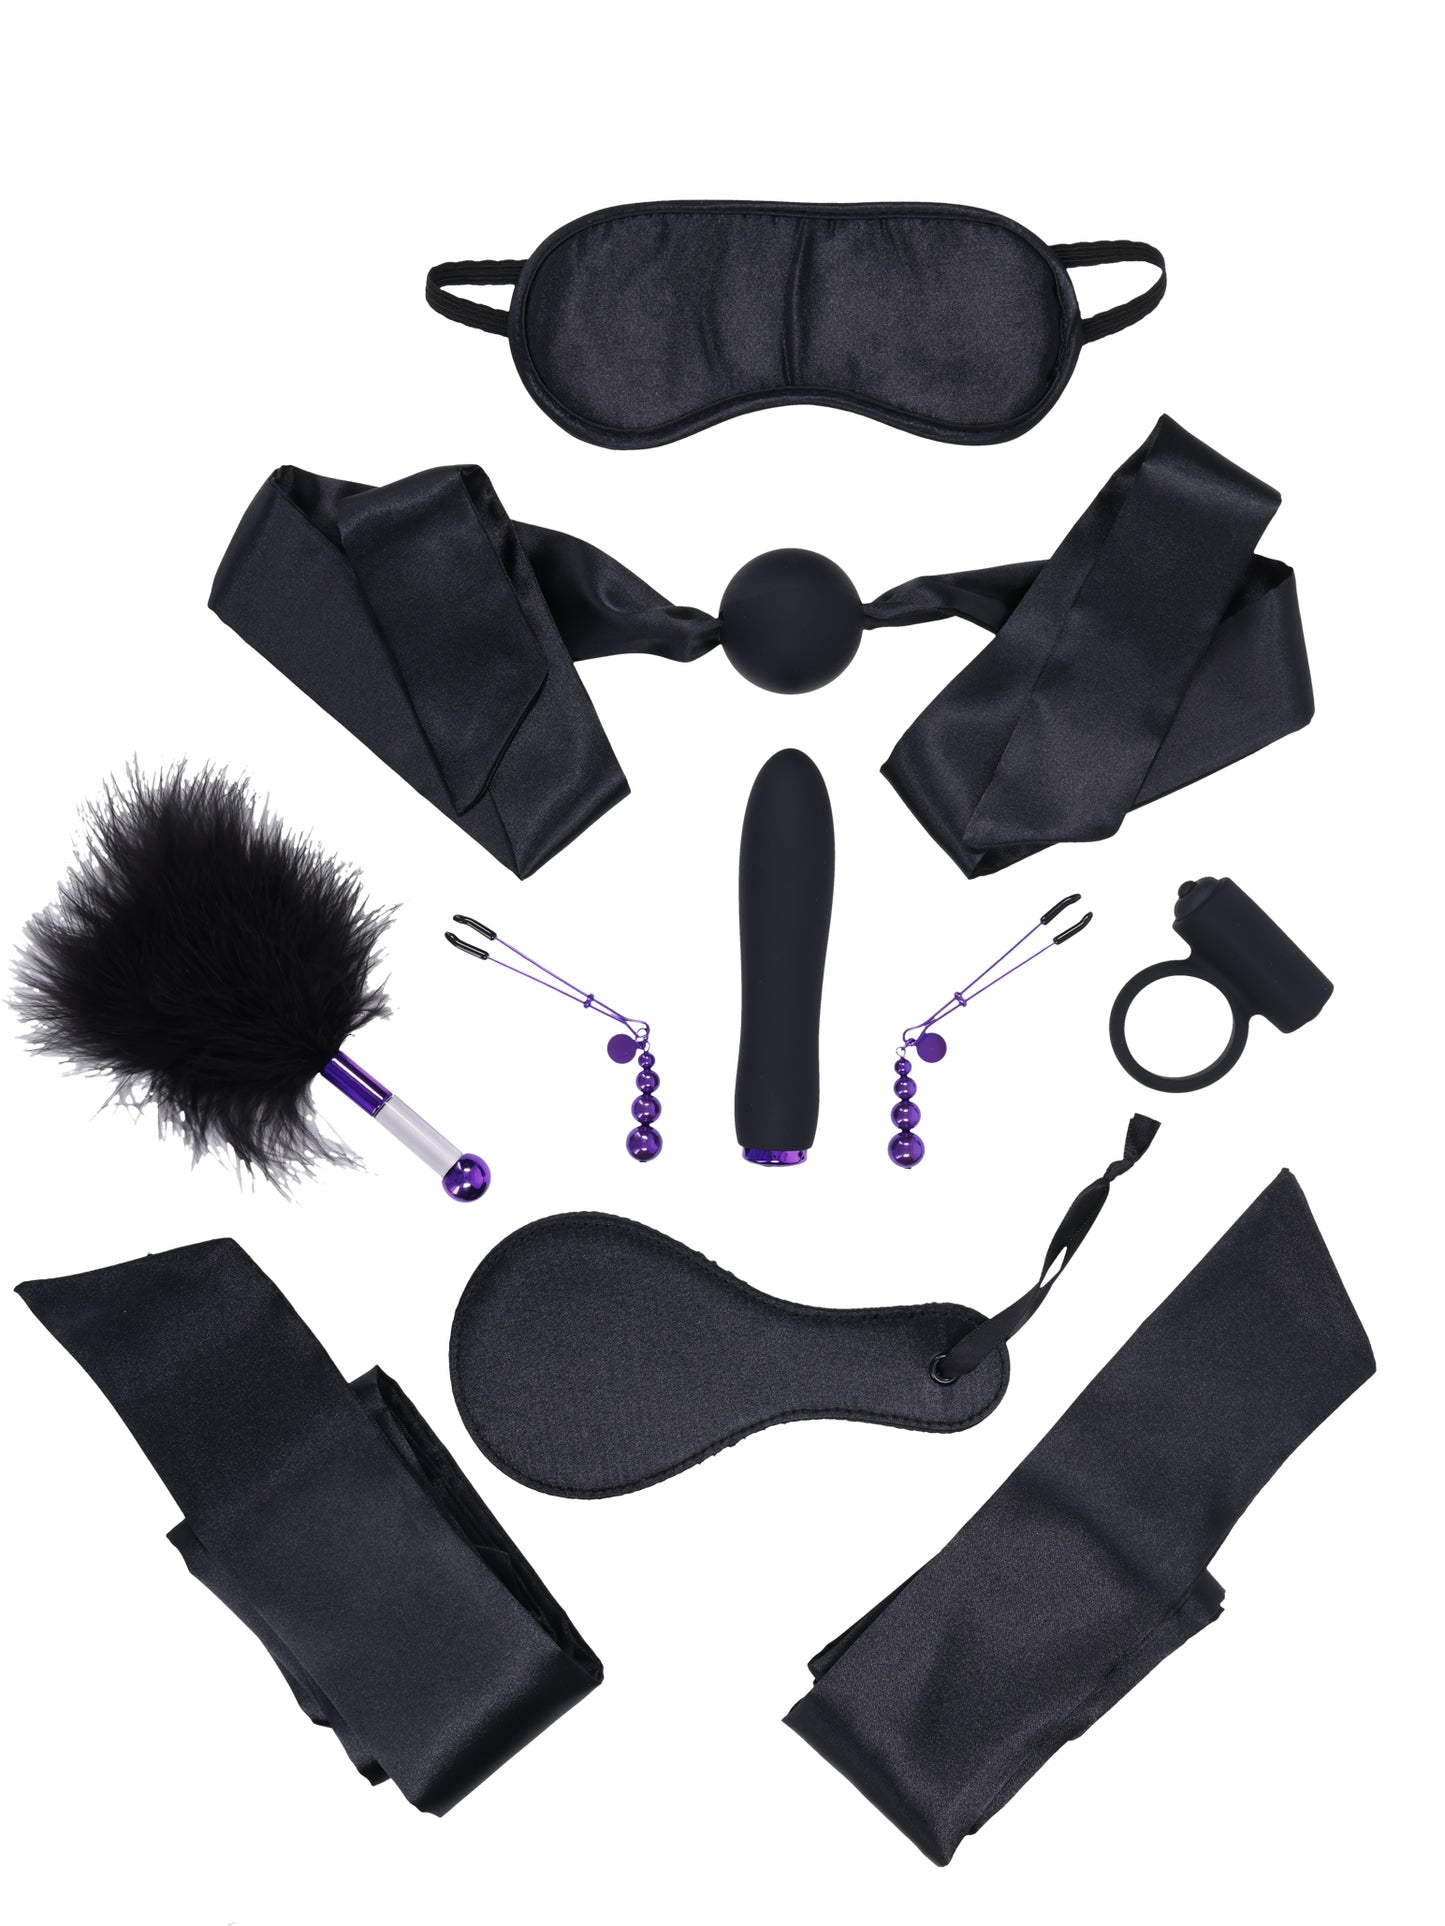 Merci - the Vip Room - BDSM Premium Set - Black